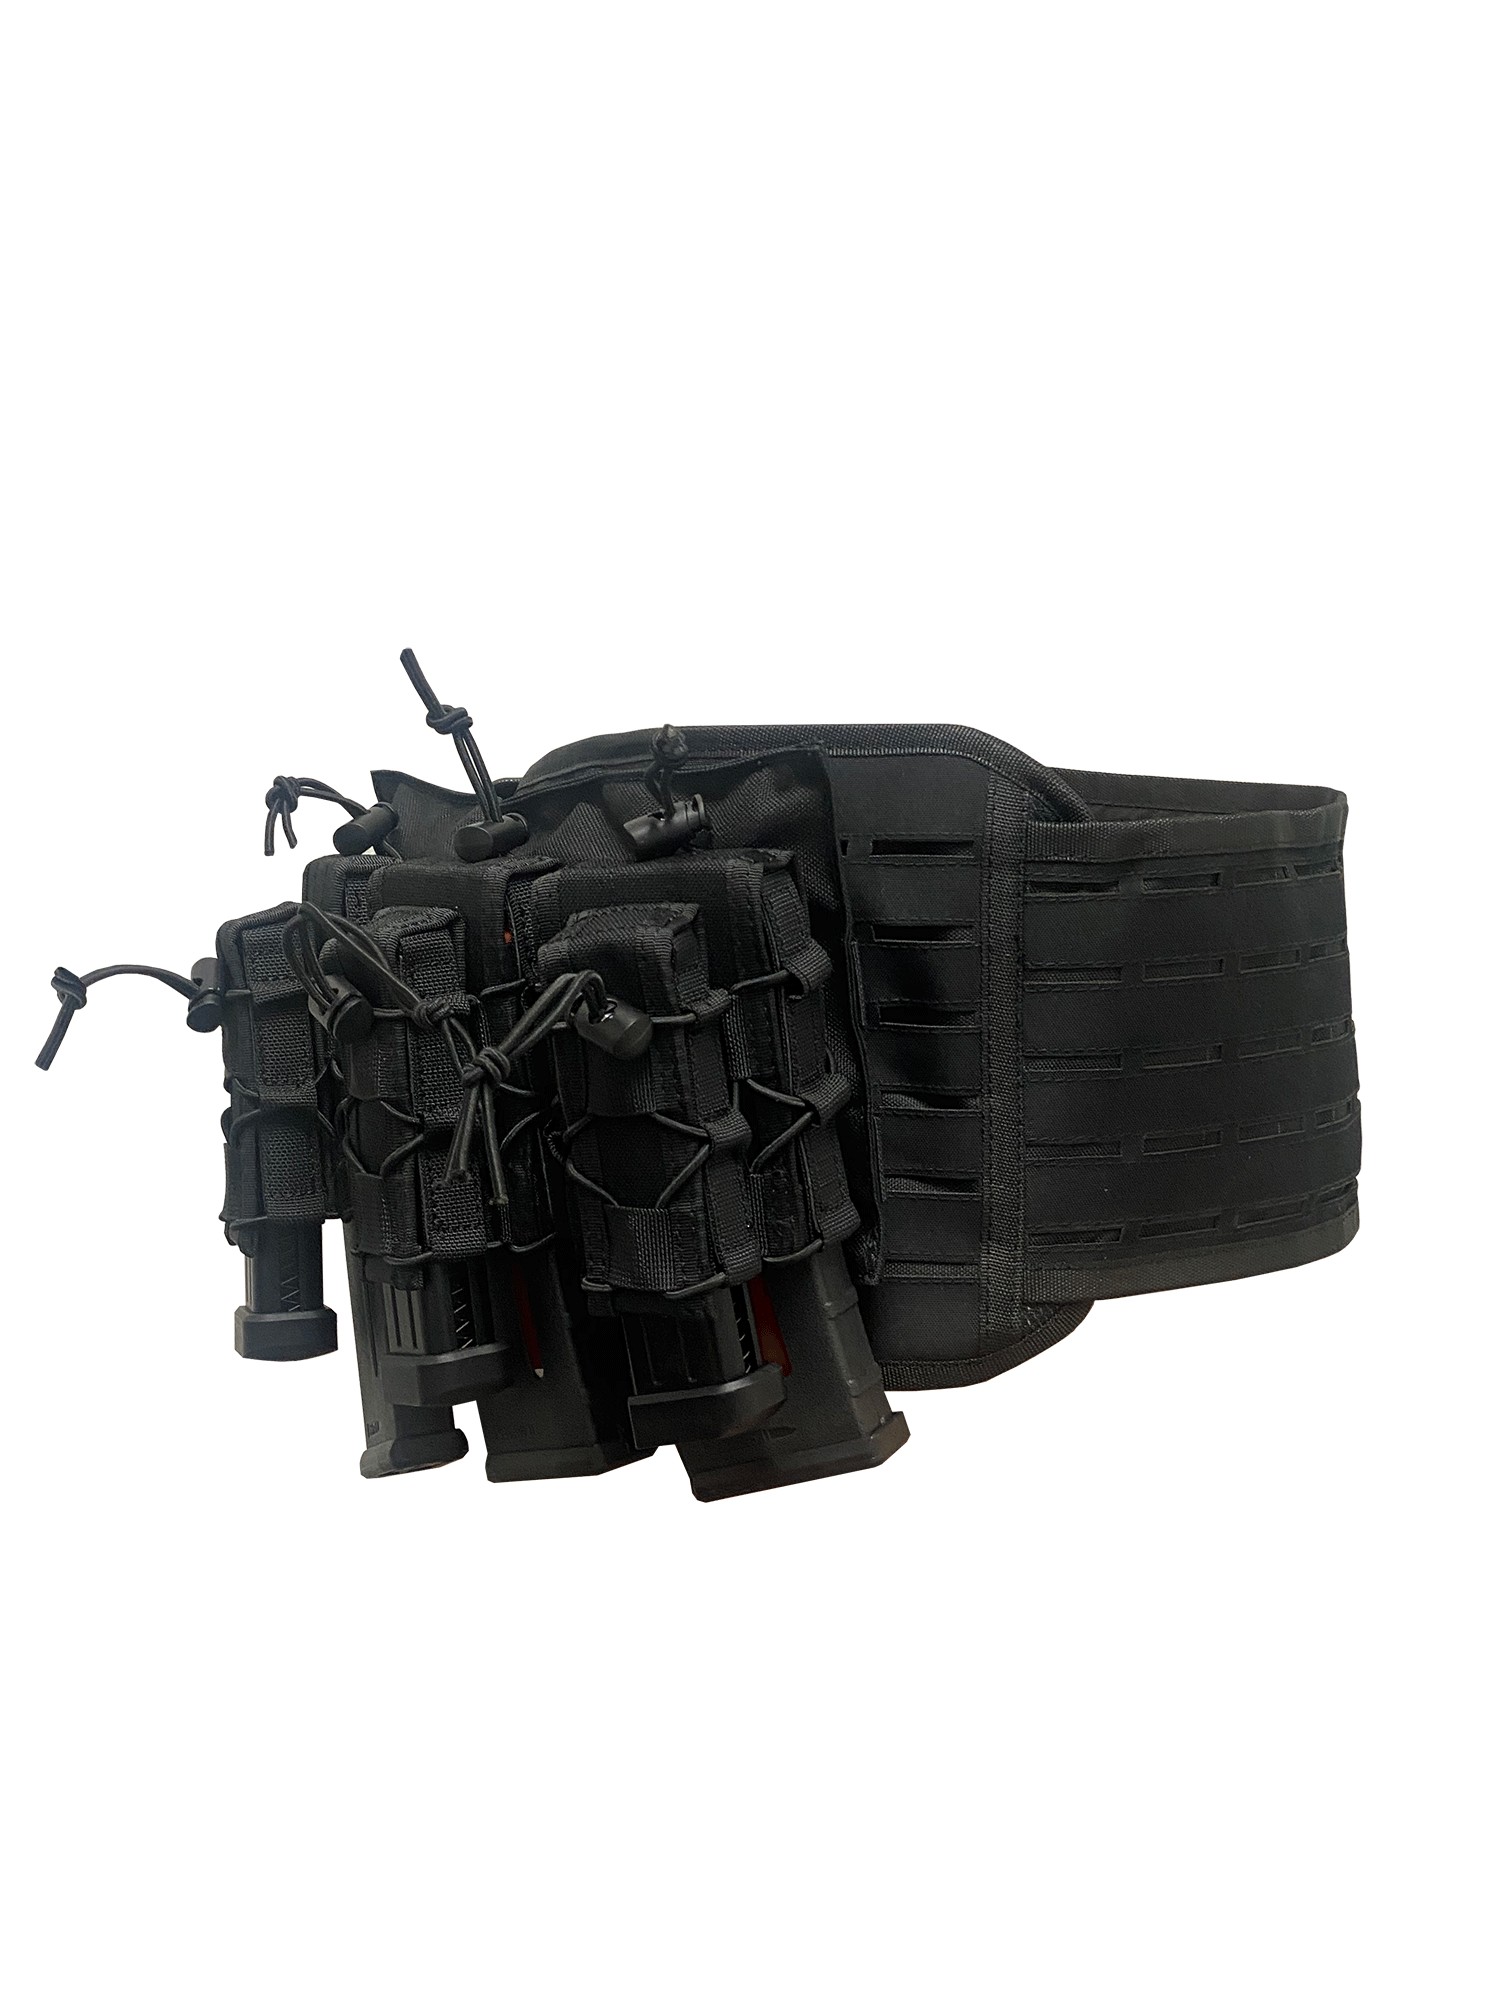 Gunfighter Airsoft Tac Pack - Black